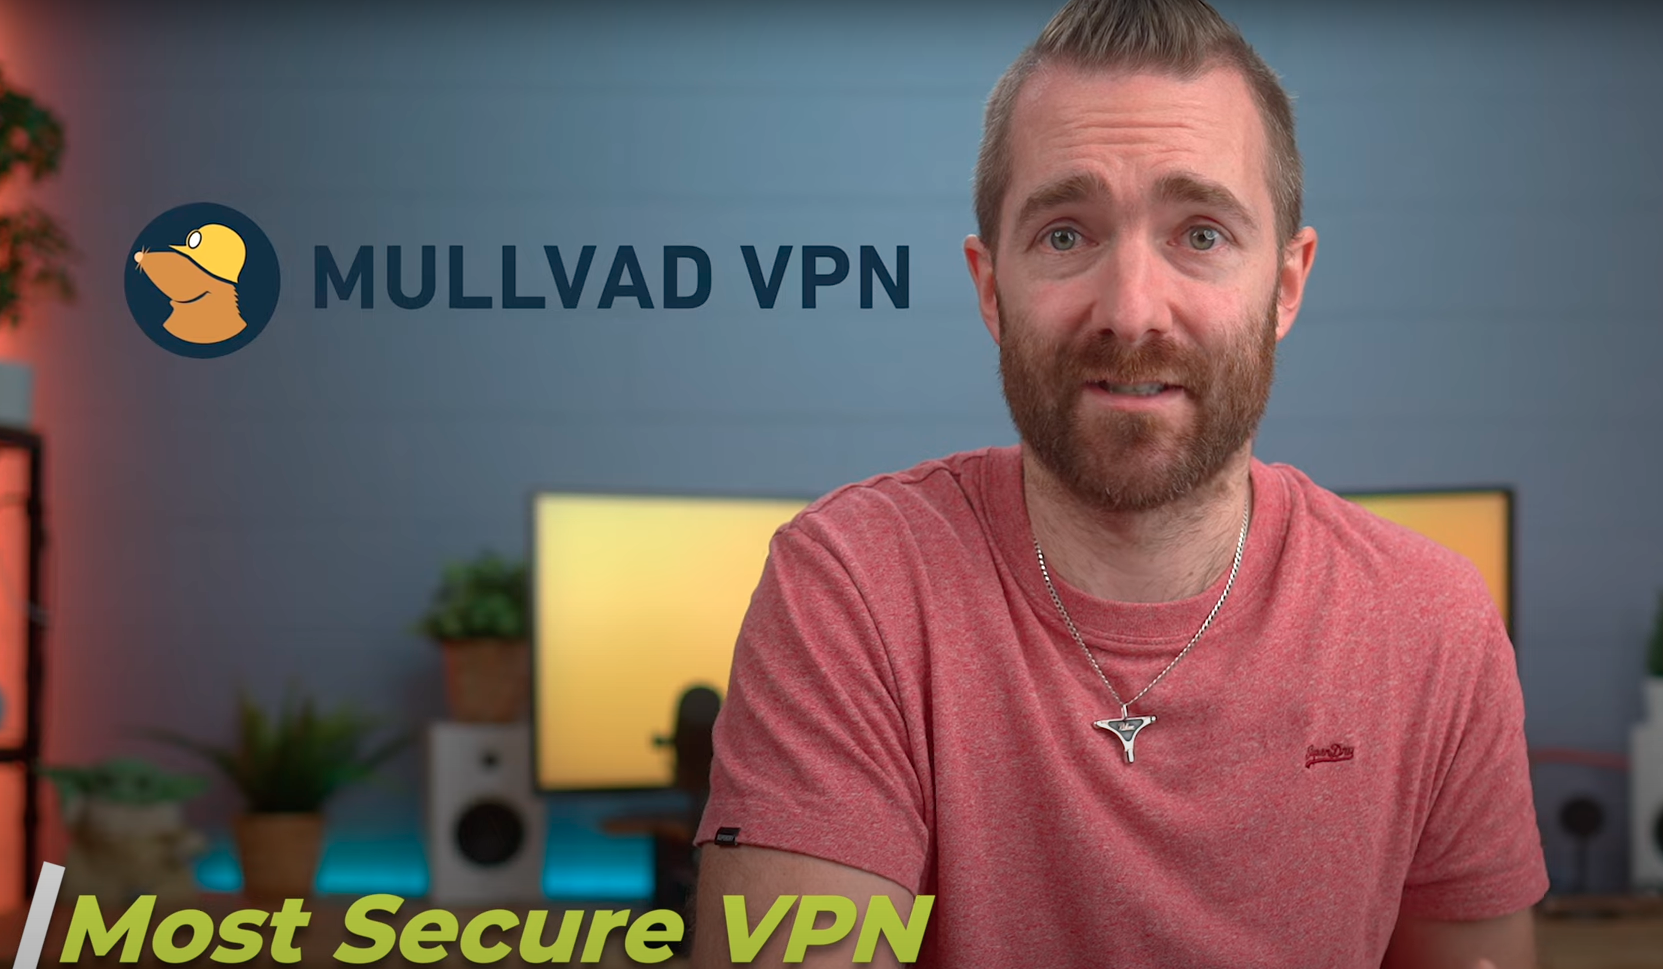 Most secure VPN of 2023 goes to Mullvad VPN